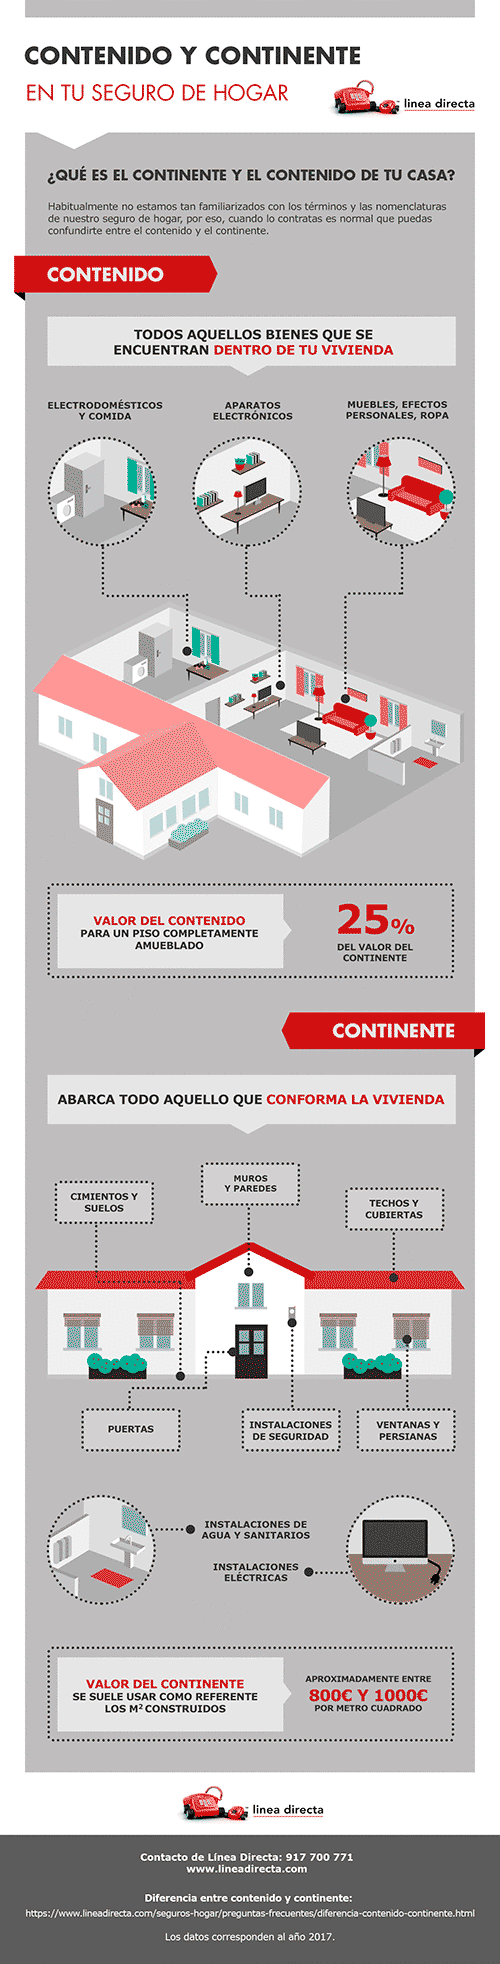 infografia_contenito Continente seguro de hogar